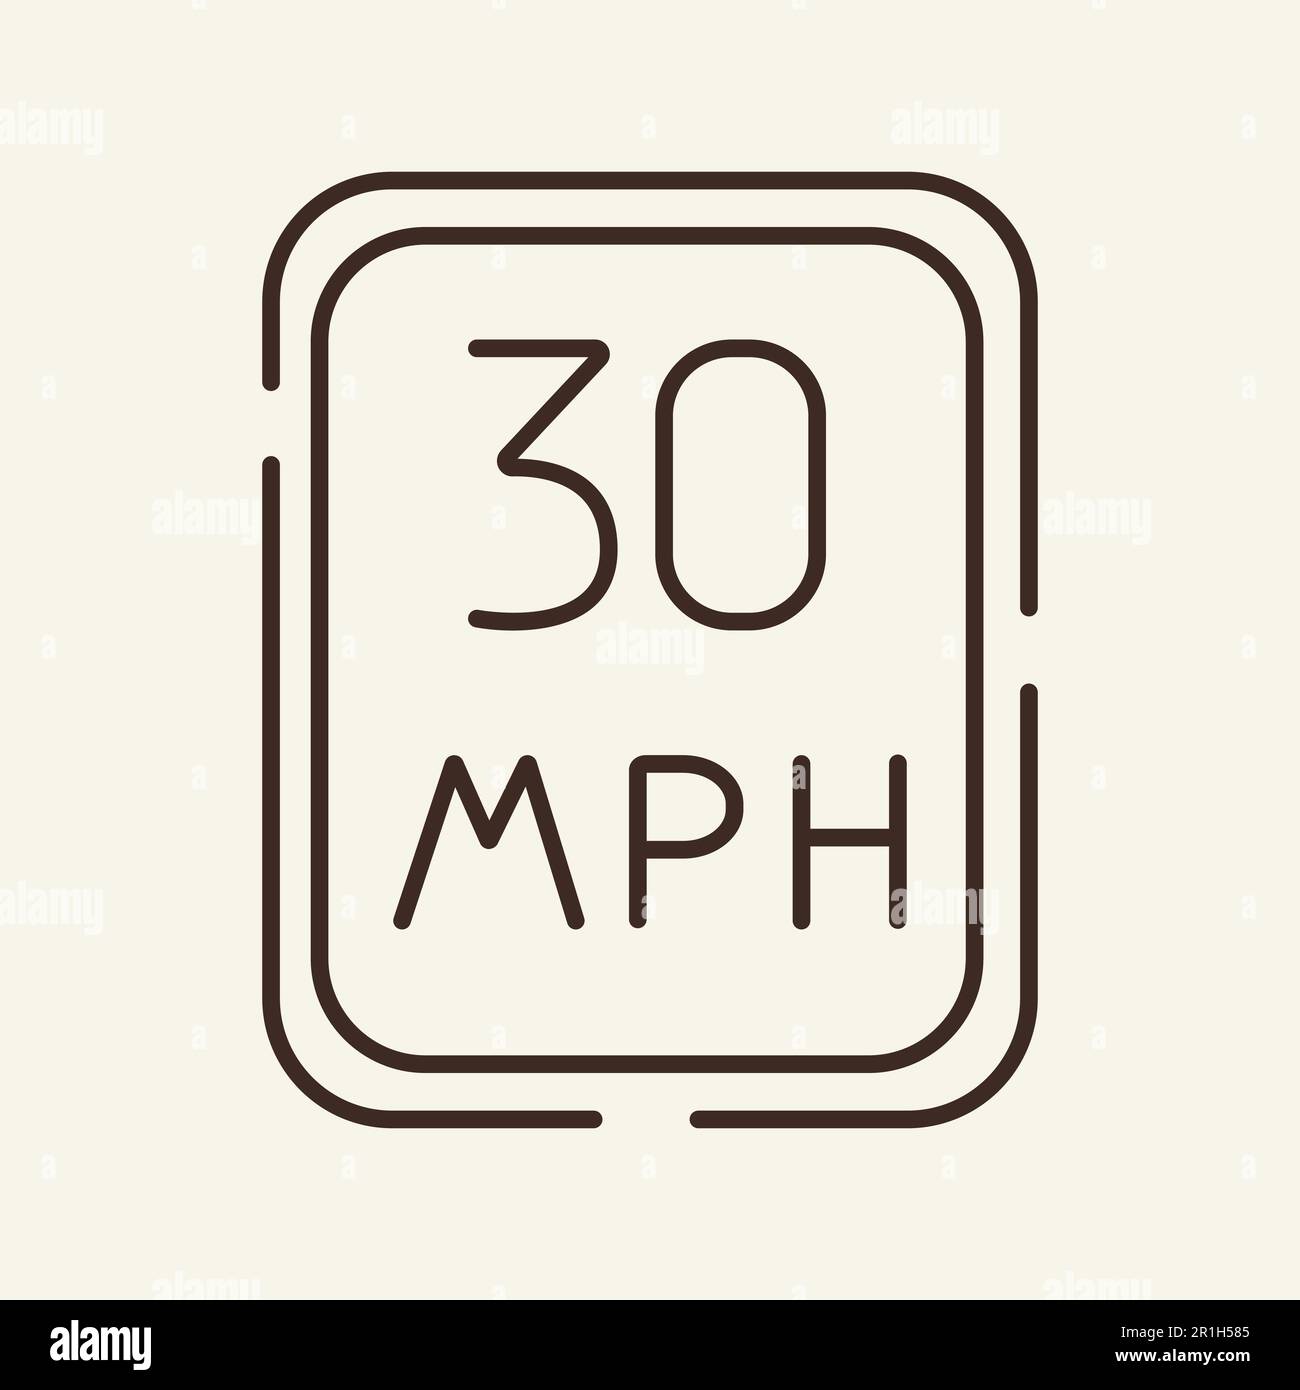 Speed limit line icon., Stock vector